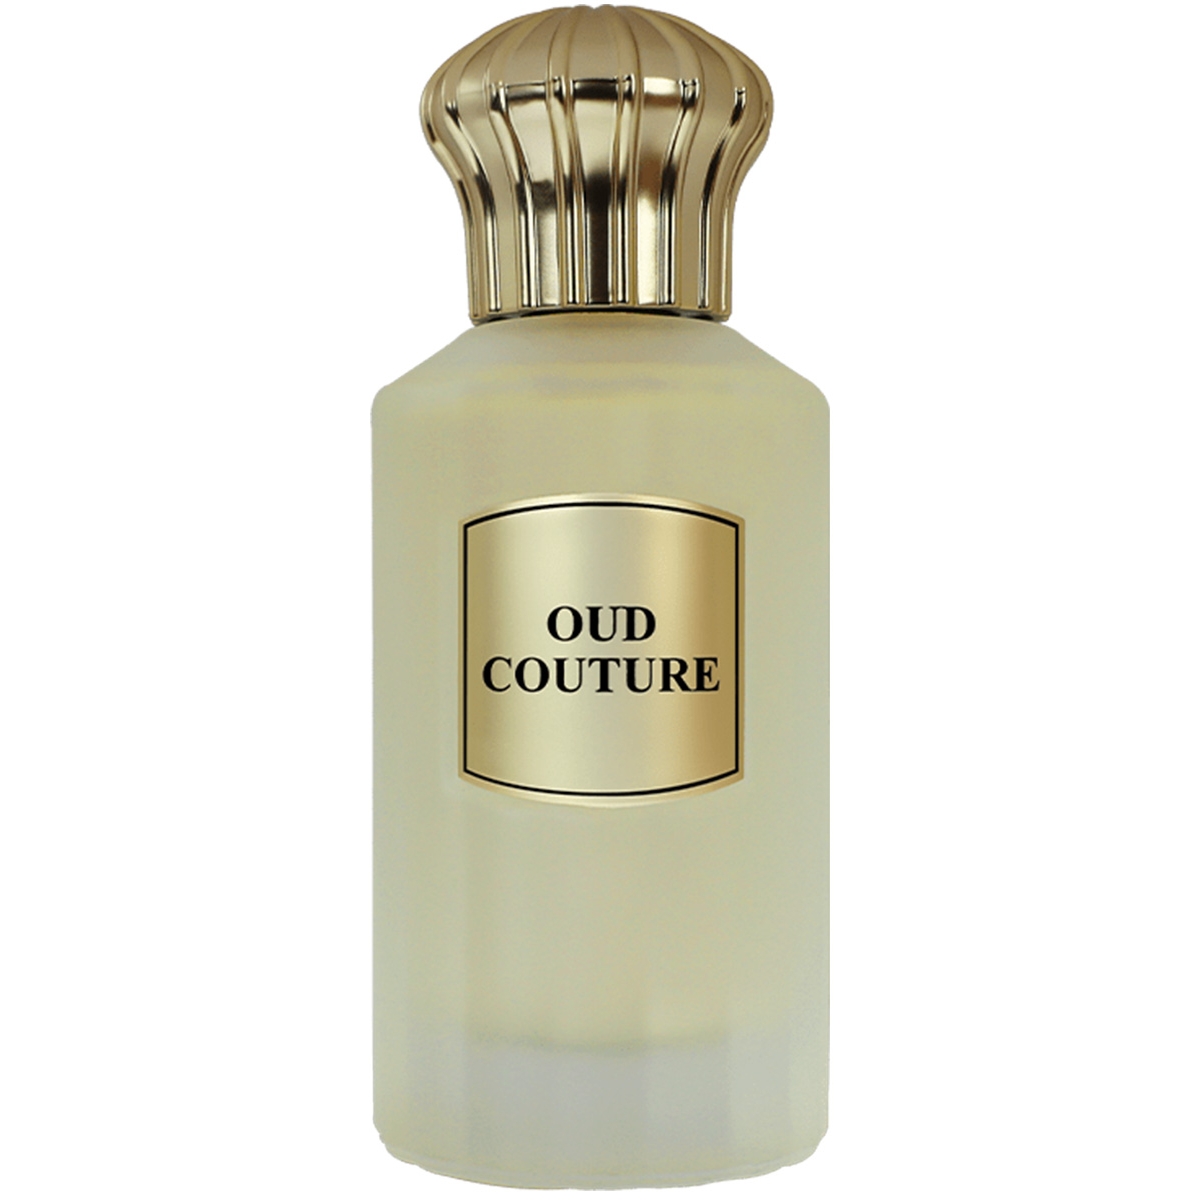 Oud Couture Ahmed al Maghribi Perfumes Perfumes, Profumi Unisex, Arada Perfumes